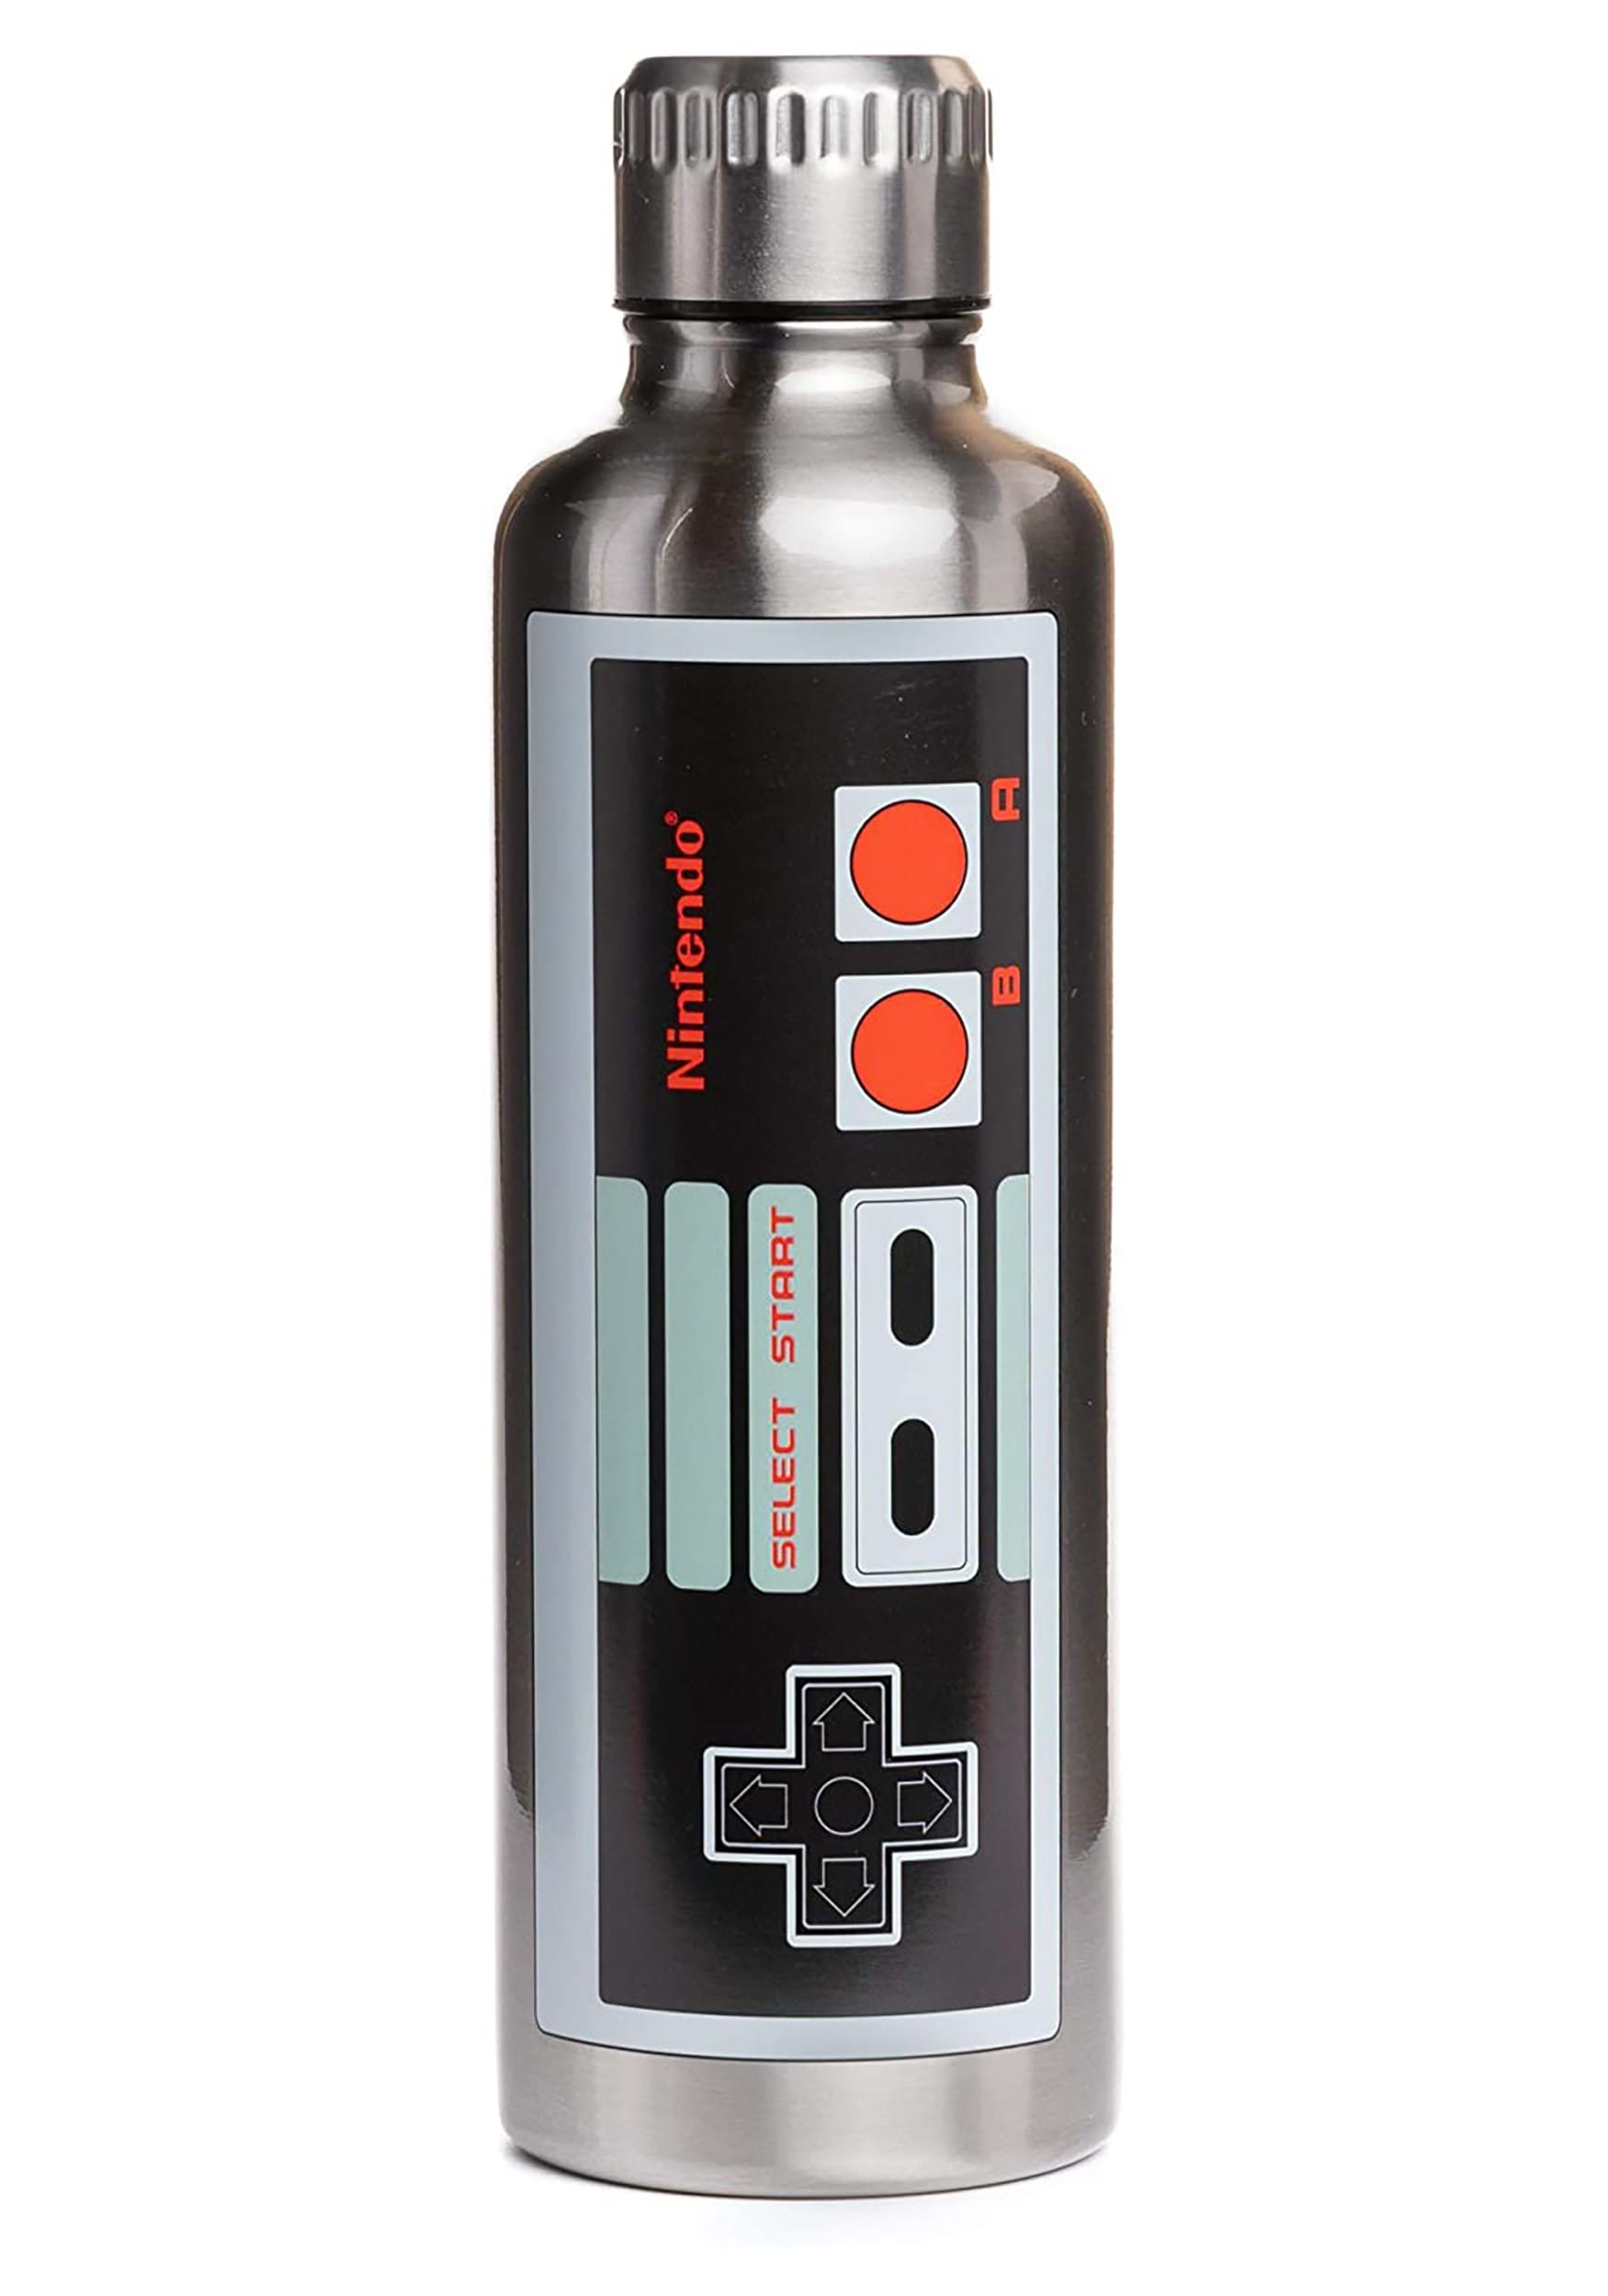 NES Stainless Steel Water Bottle